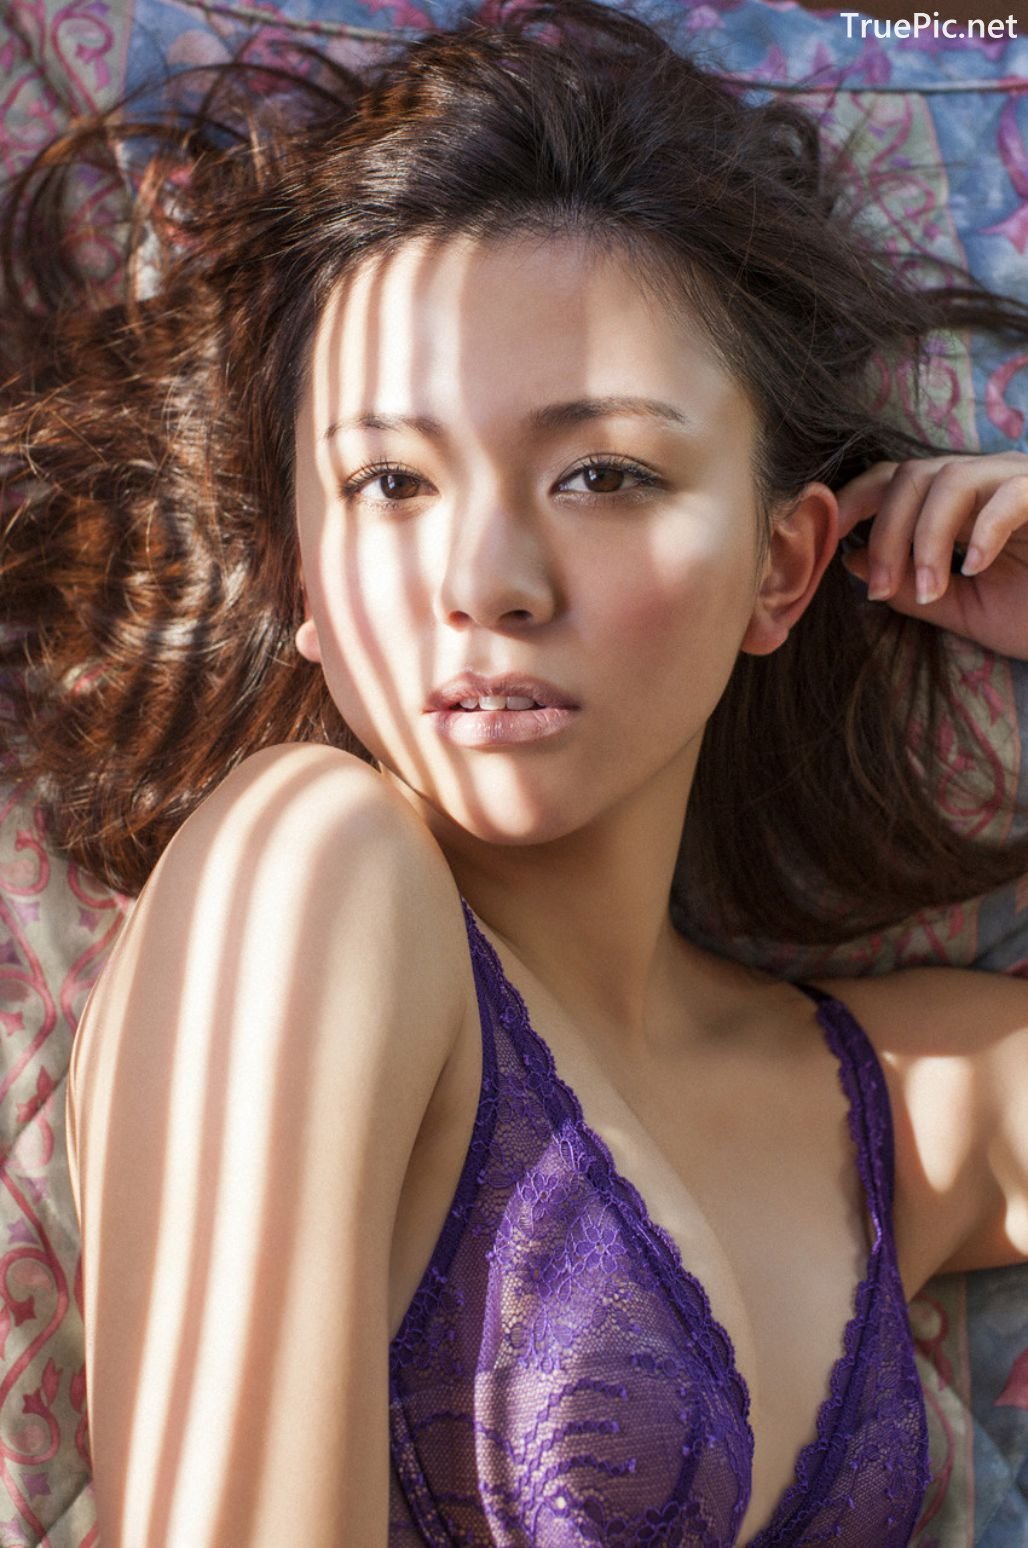 Image-Japanese-Actress-And-Model-Yuka-Konan-Hot-Beauty-Of-Angel-TruePic.net- Picture-36